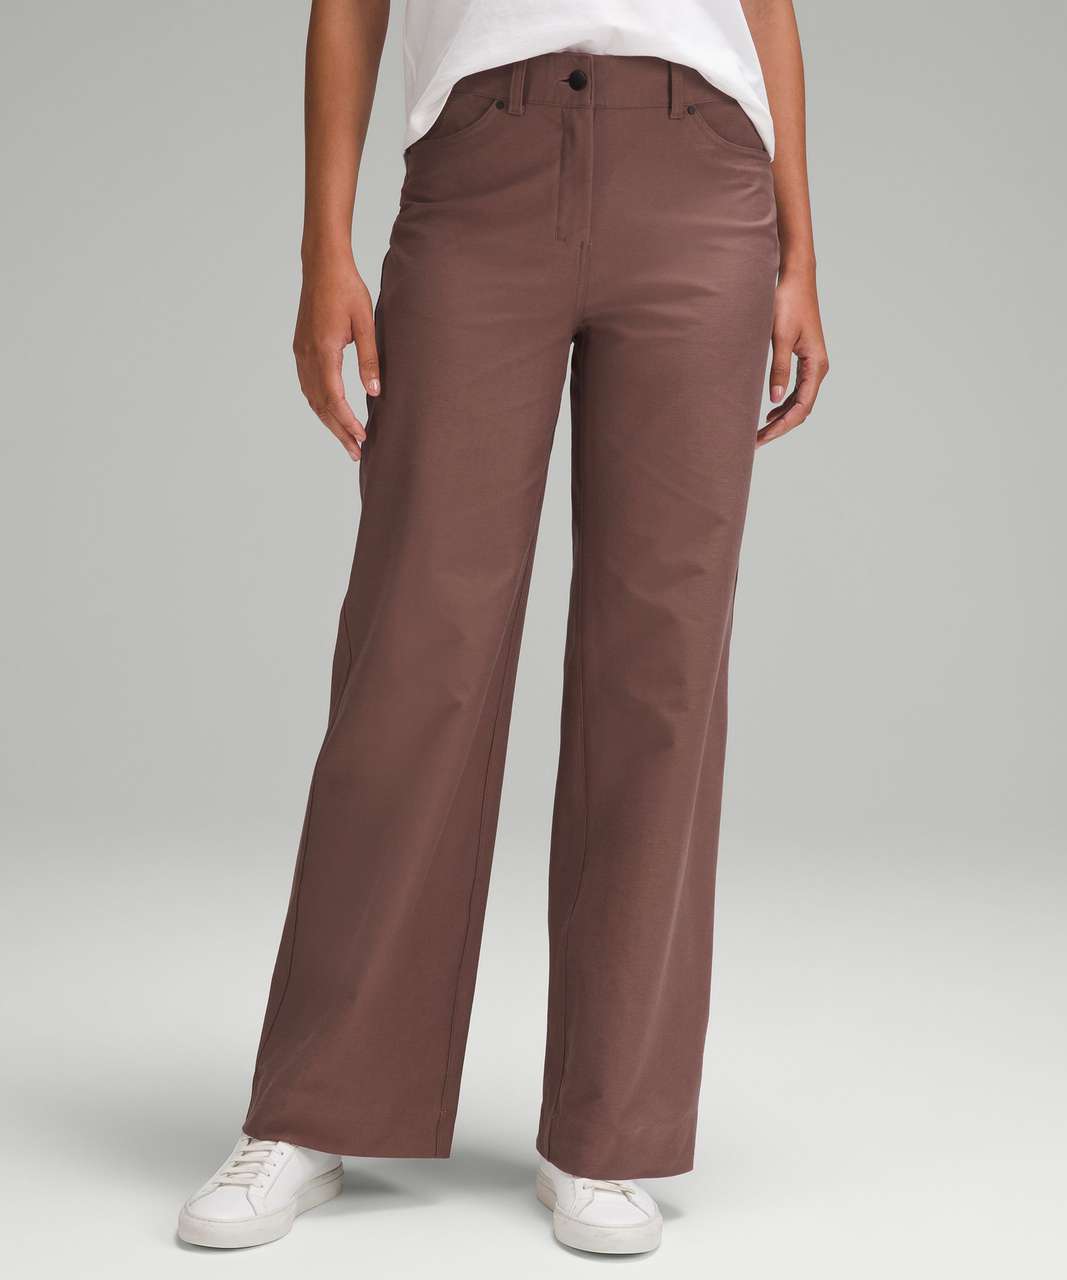 Lululemon Lululemon City Sleek 5 Pocket Trouser Pant color DKTE Size 6